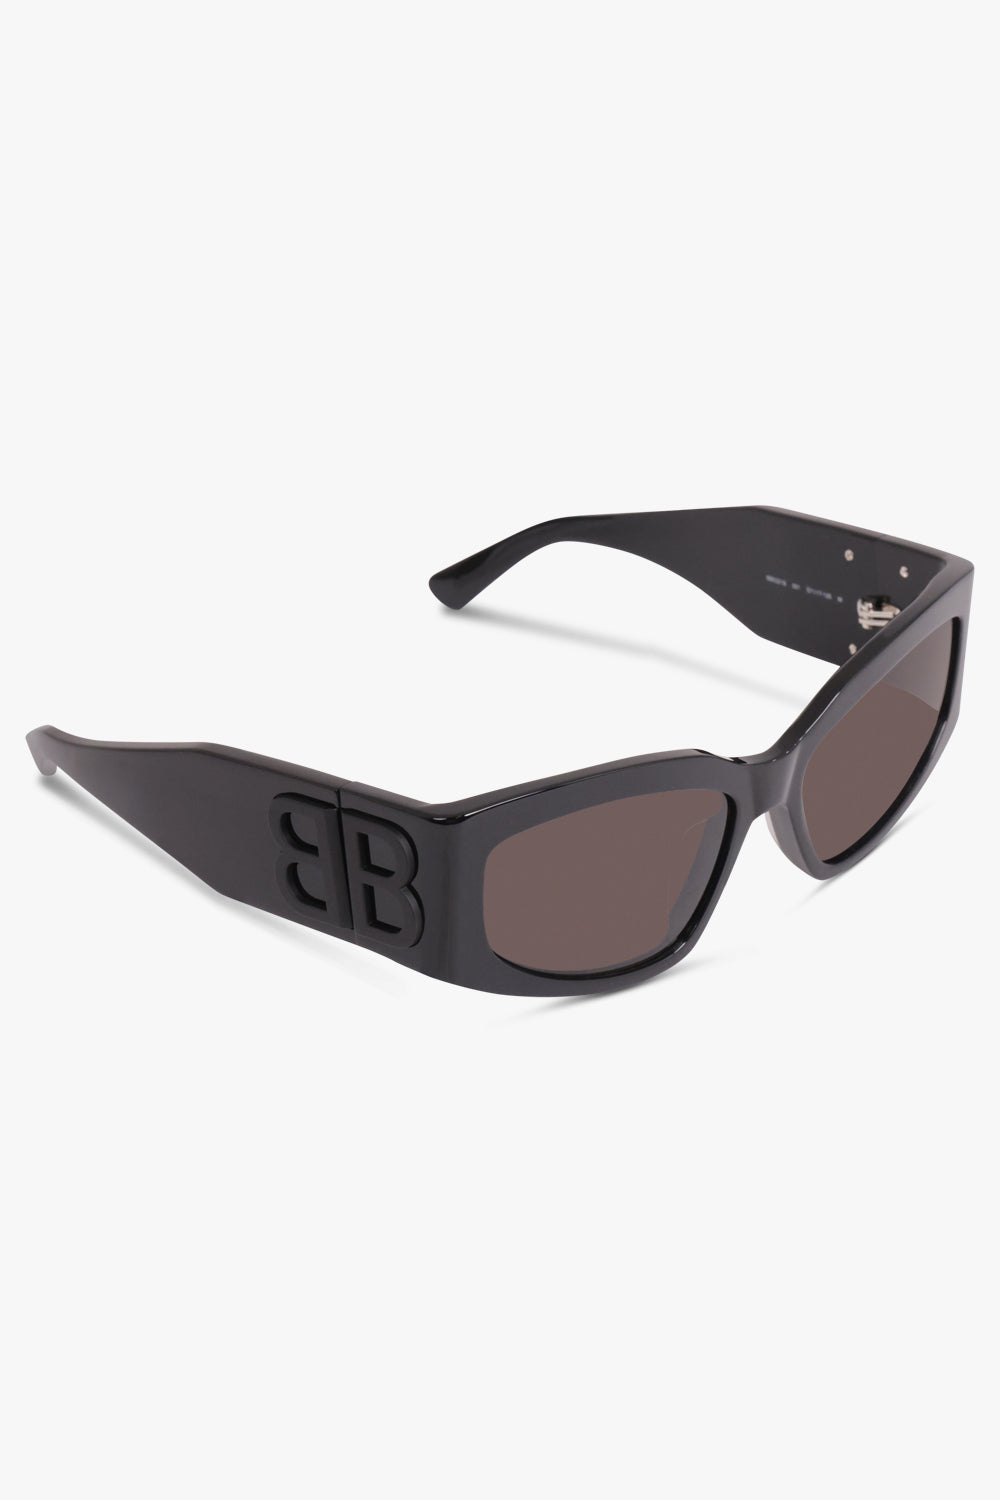 BALENCIAGA ACCESSORIES BLACK / BLACK BB031S 57 Cat Eye Sunglasses | Black